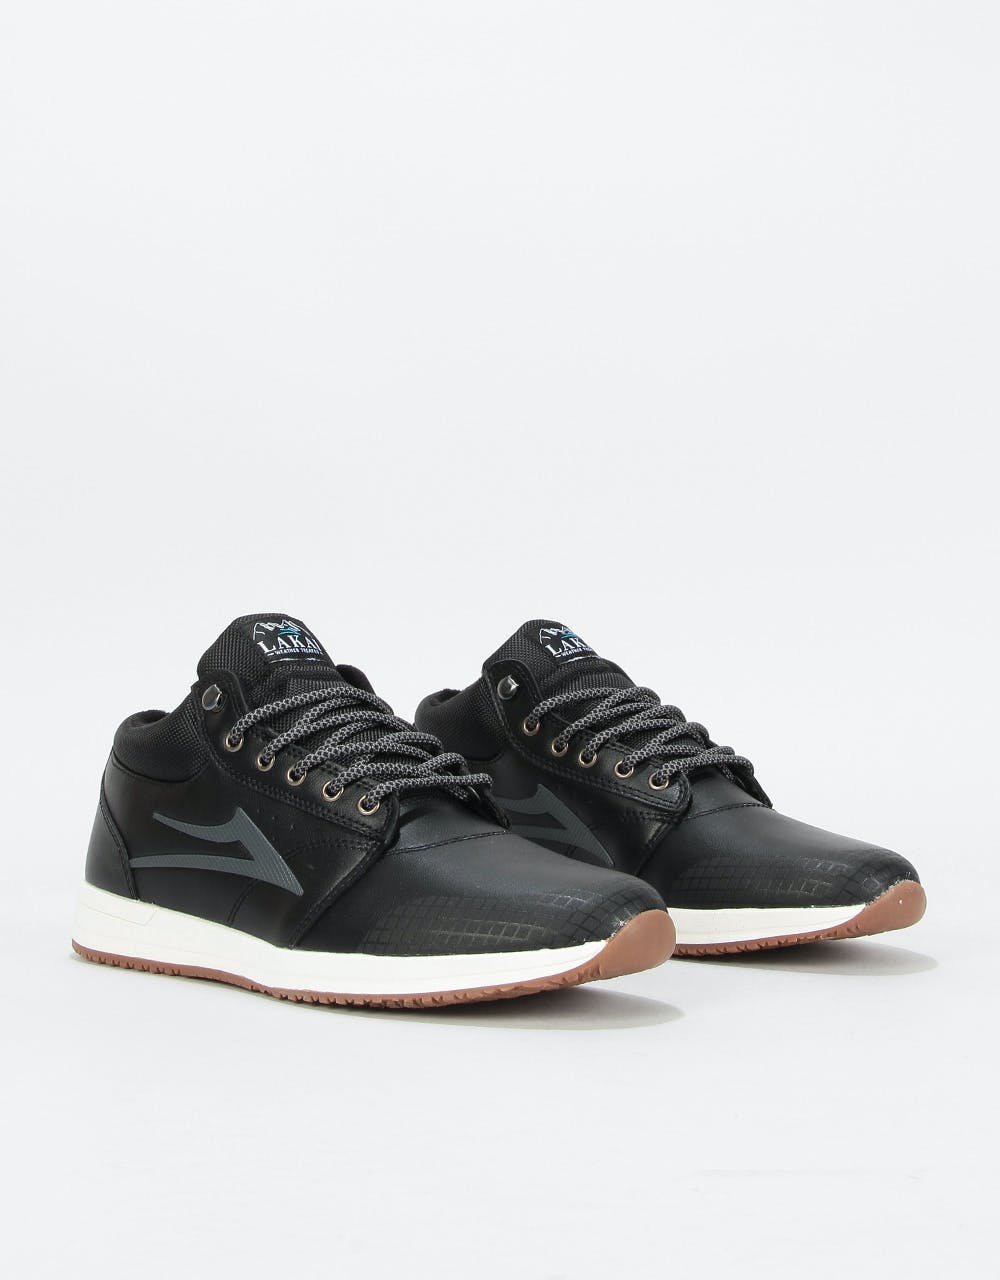 Lakai Griffin Mid WT Skate Shoes - Black Leather